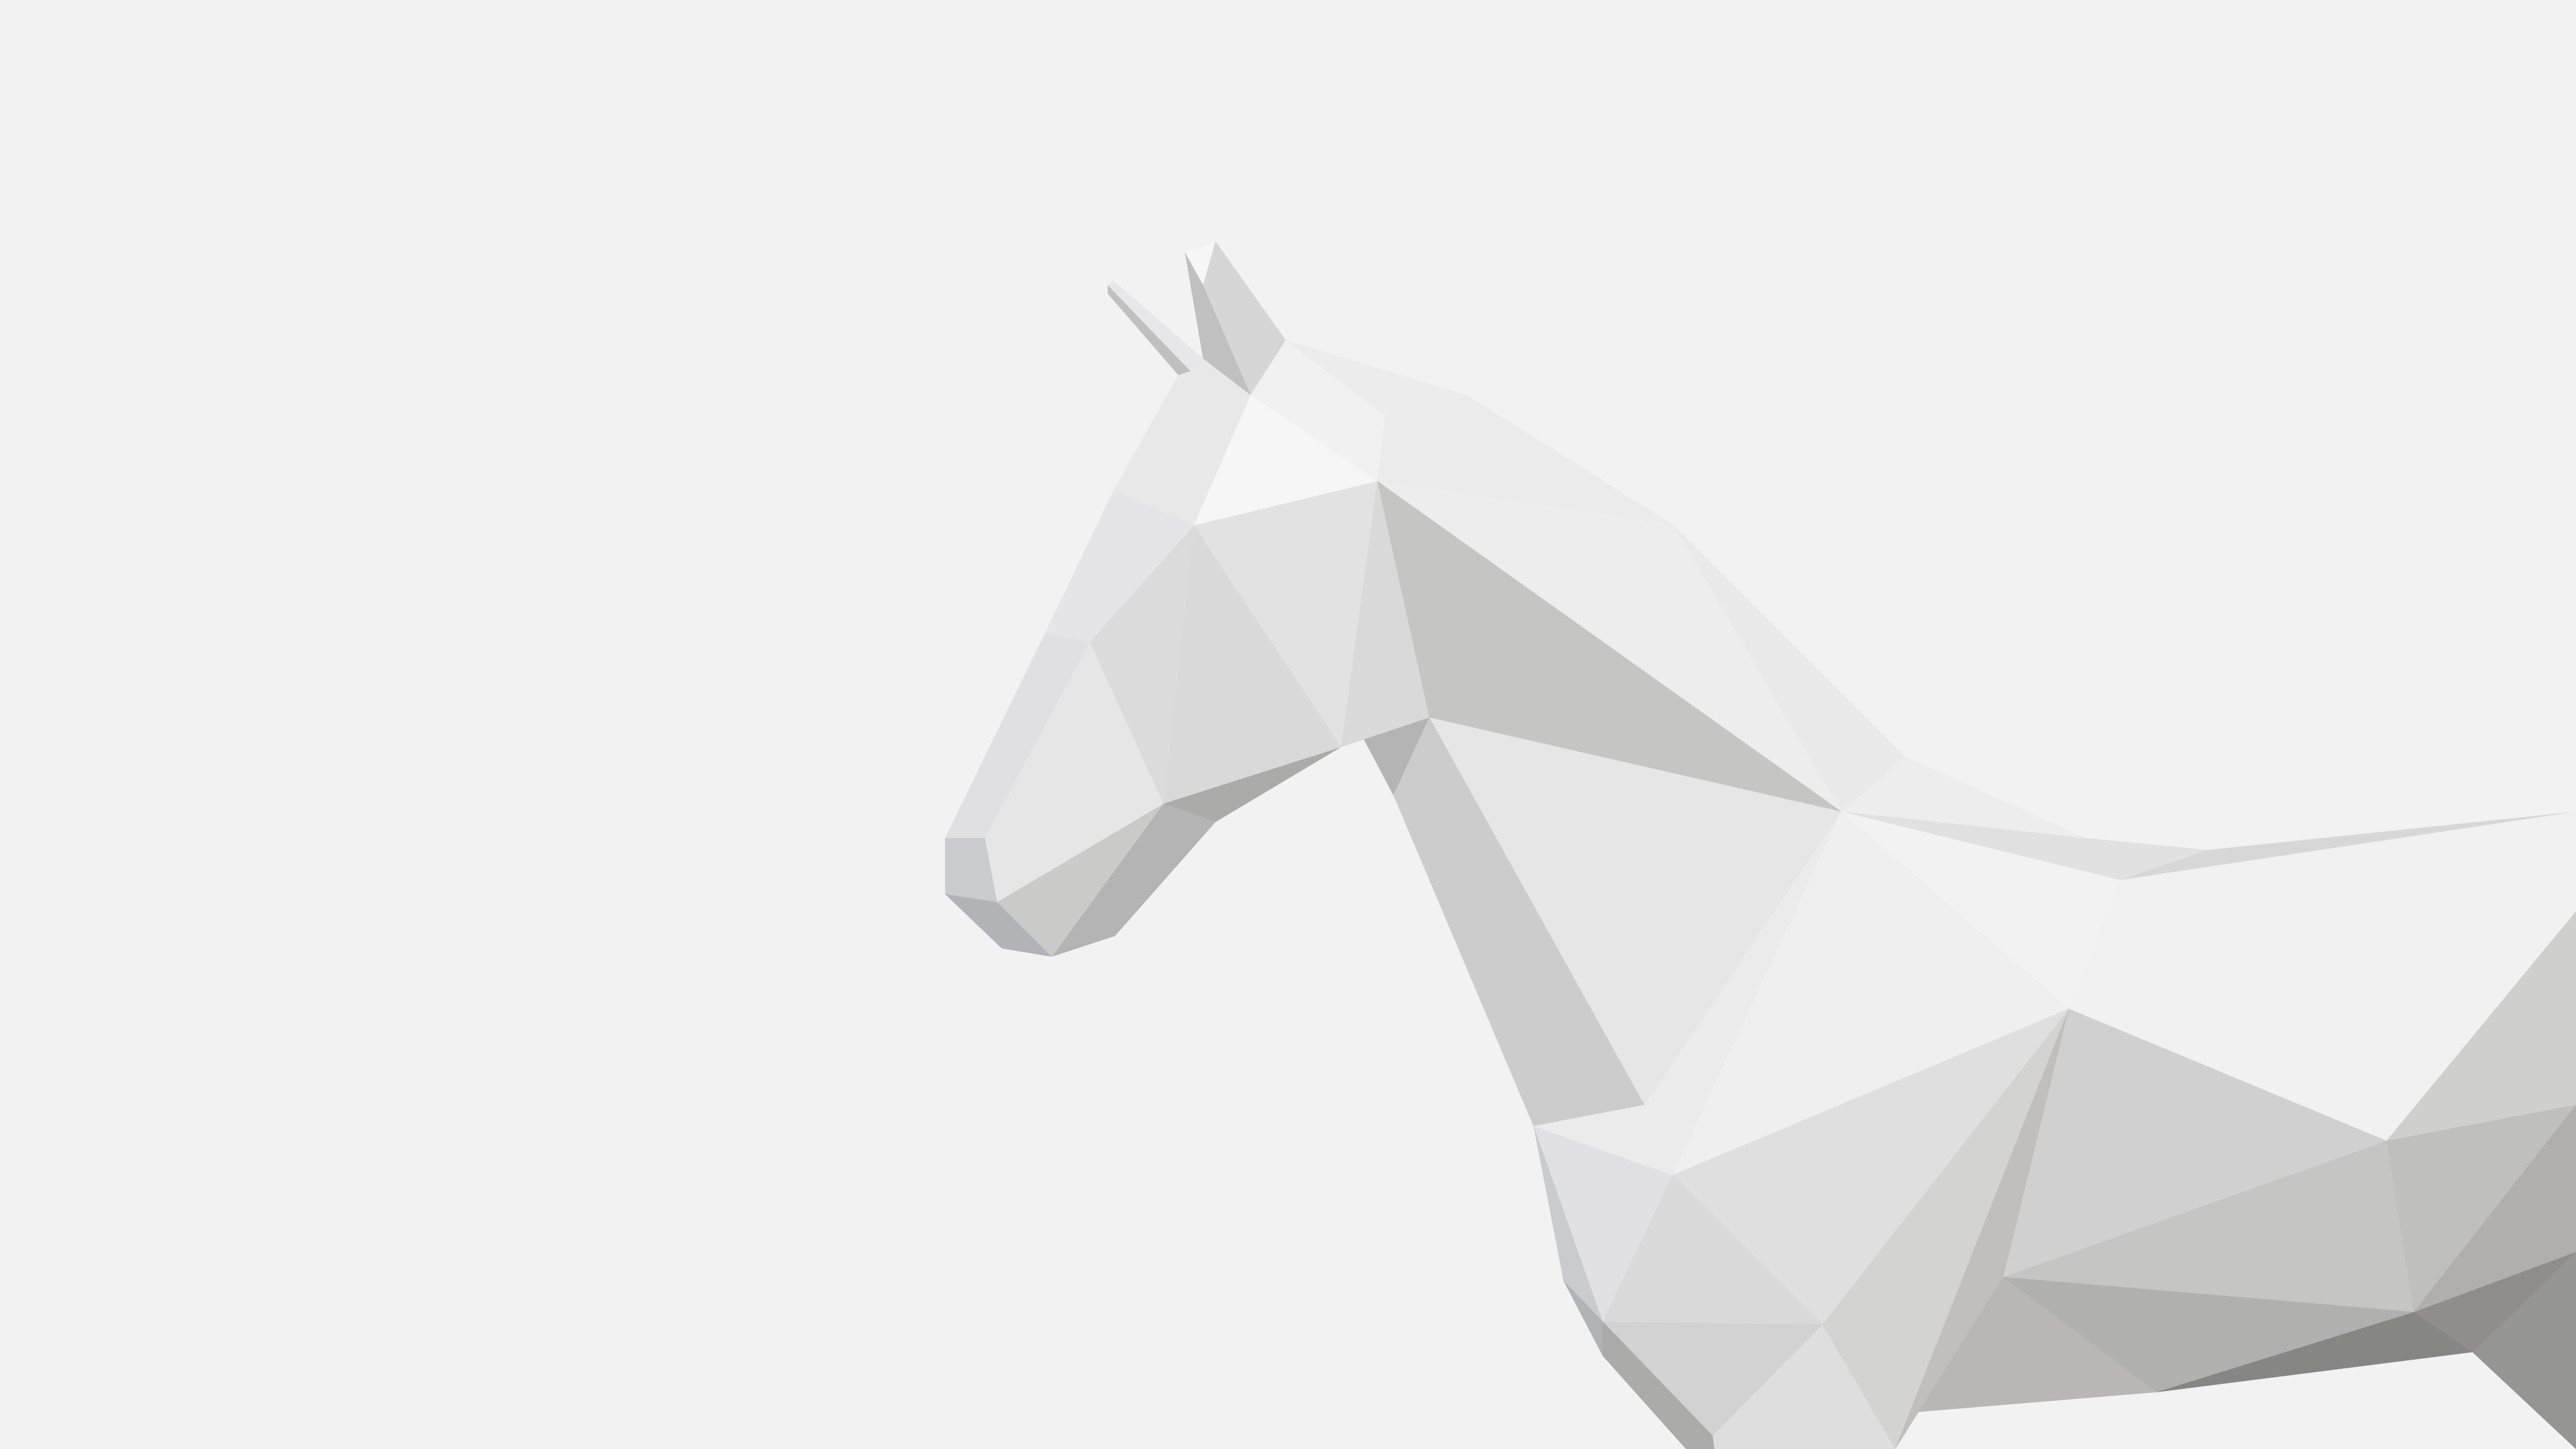 Polygon Art Minimalism Horse Simple Background Illustration Animals White Background Abstract Digita 8000x4500